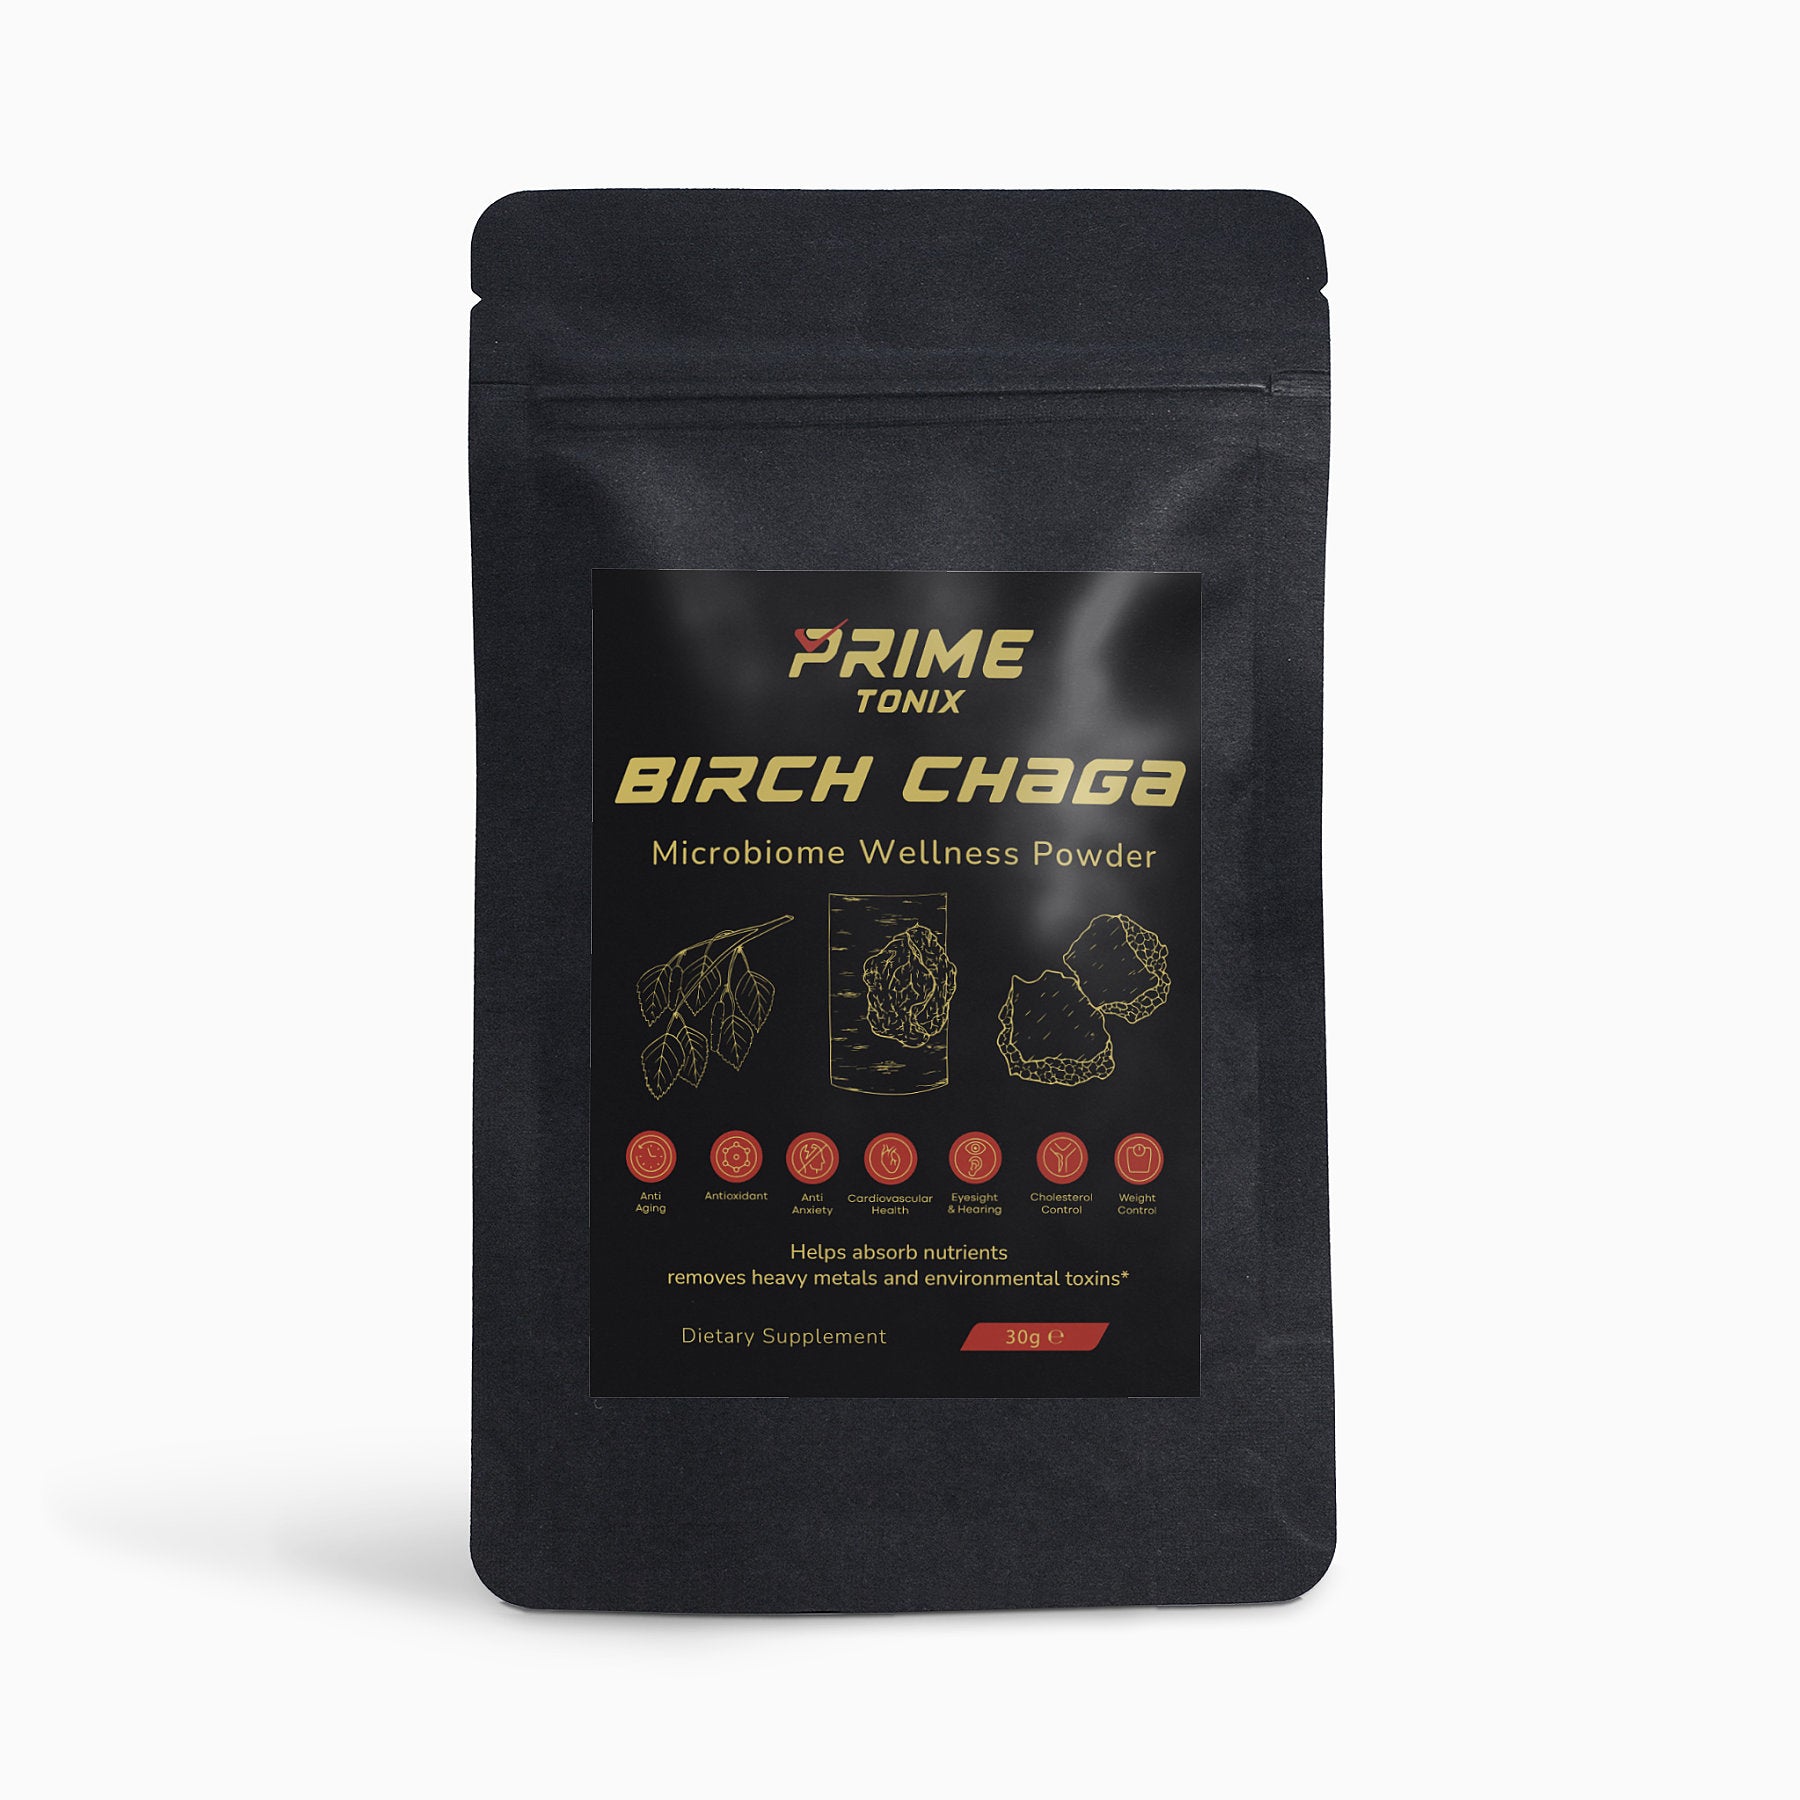 Prime Birch Chaga Microbiome Wellness Powder